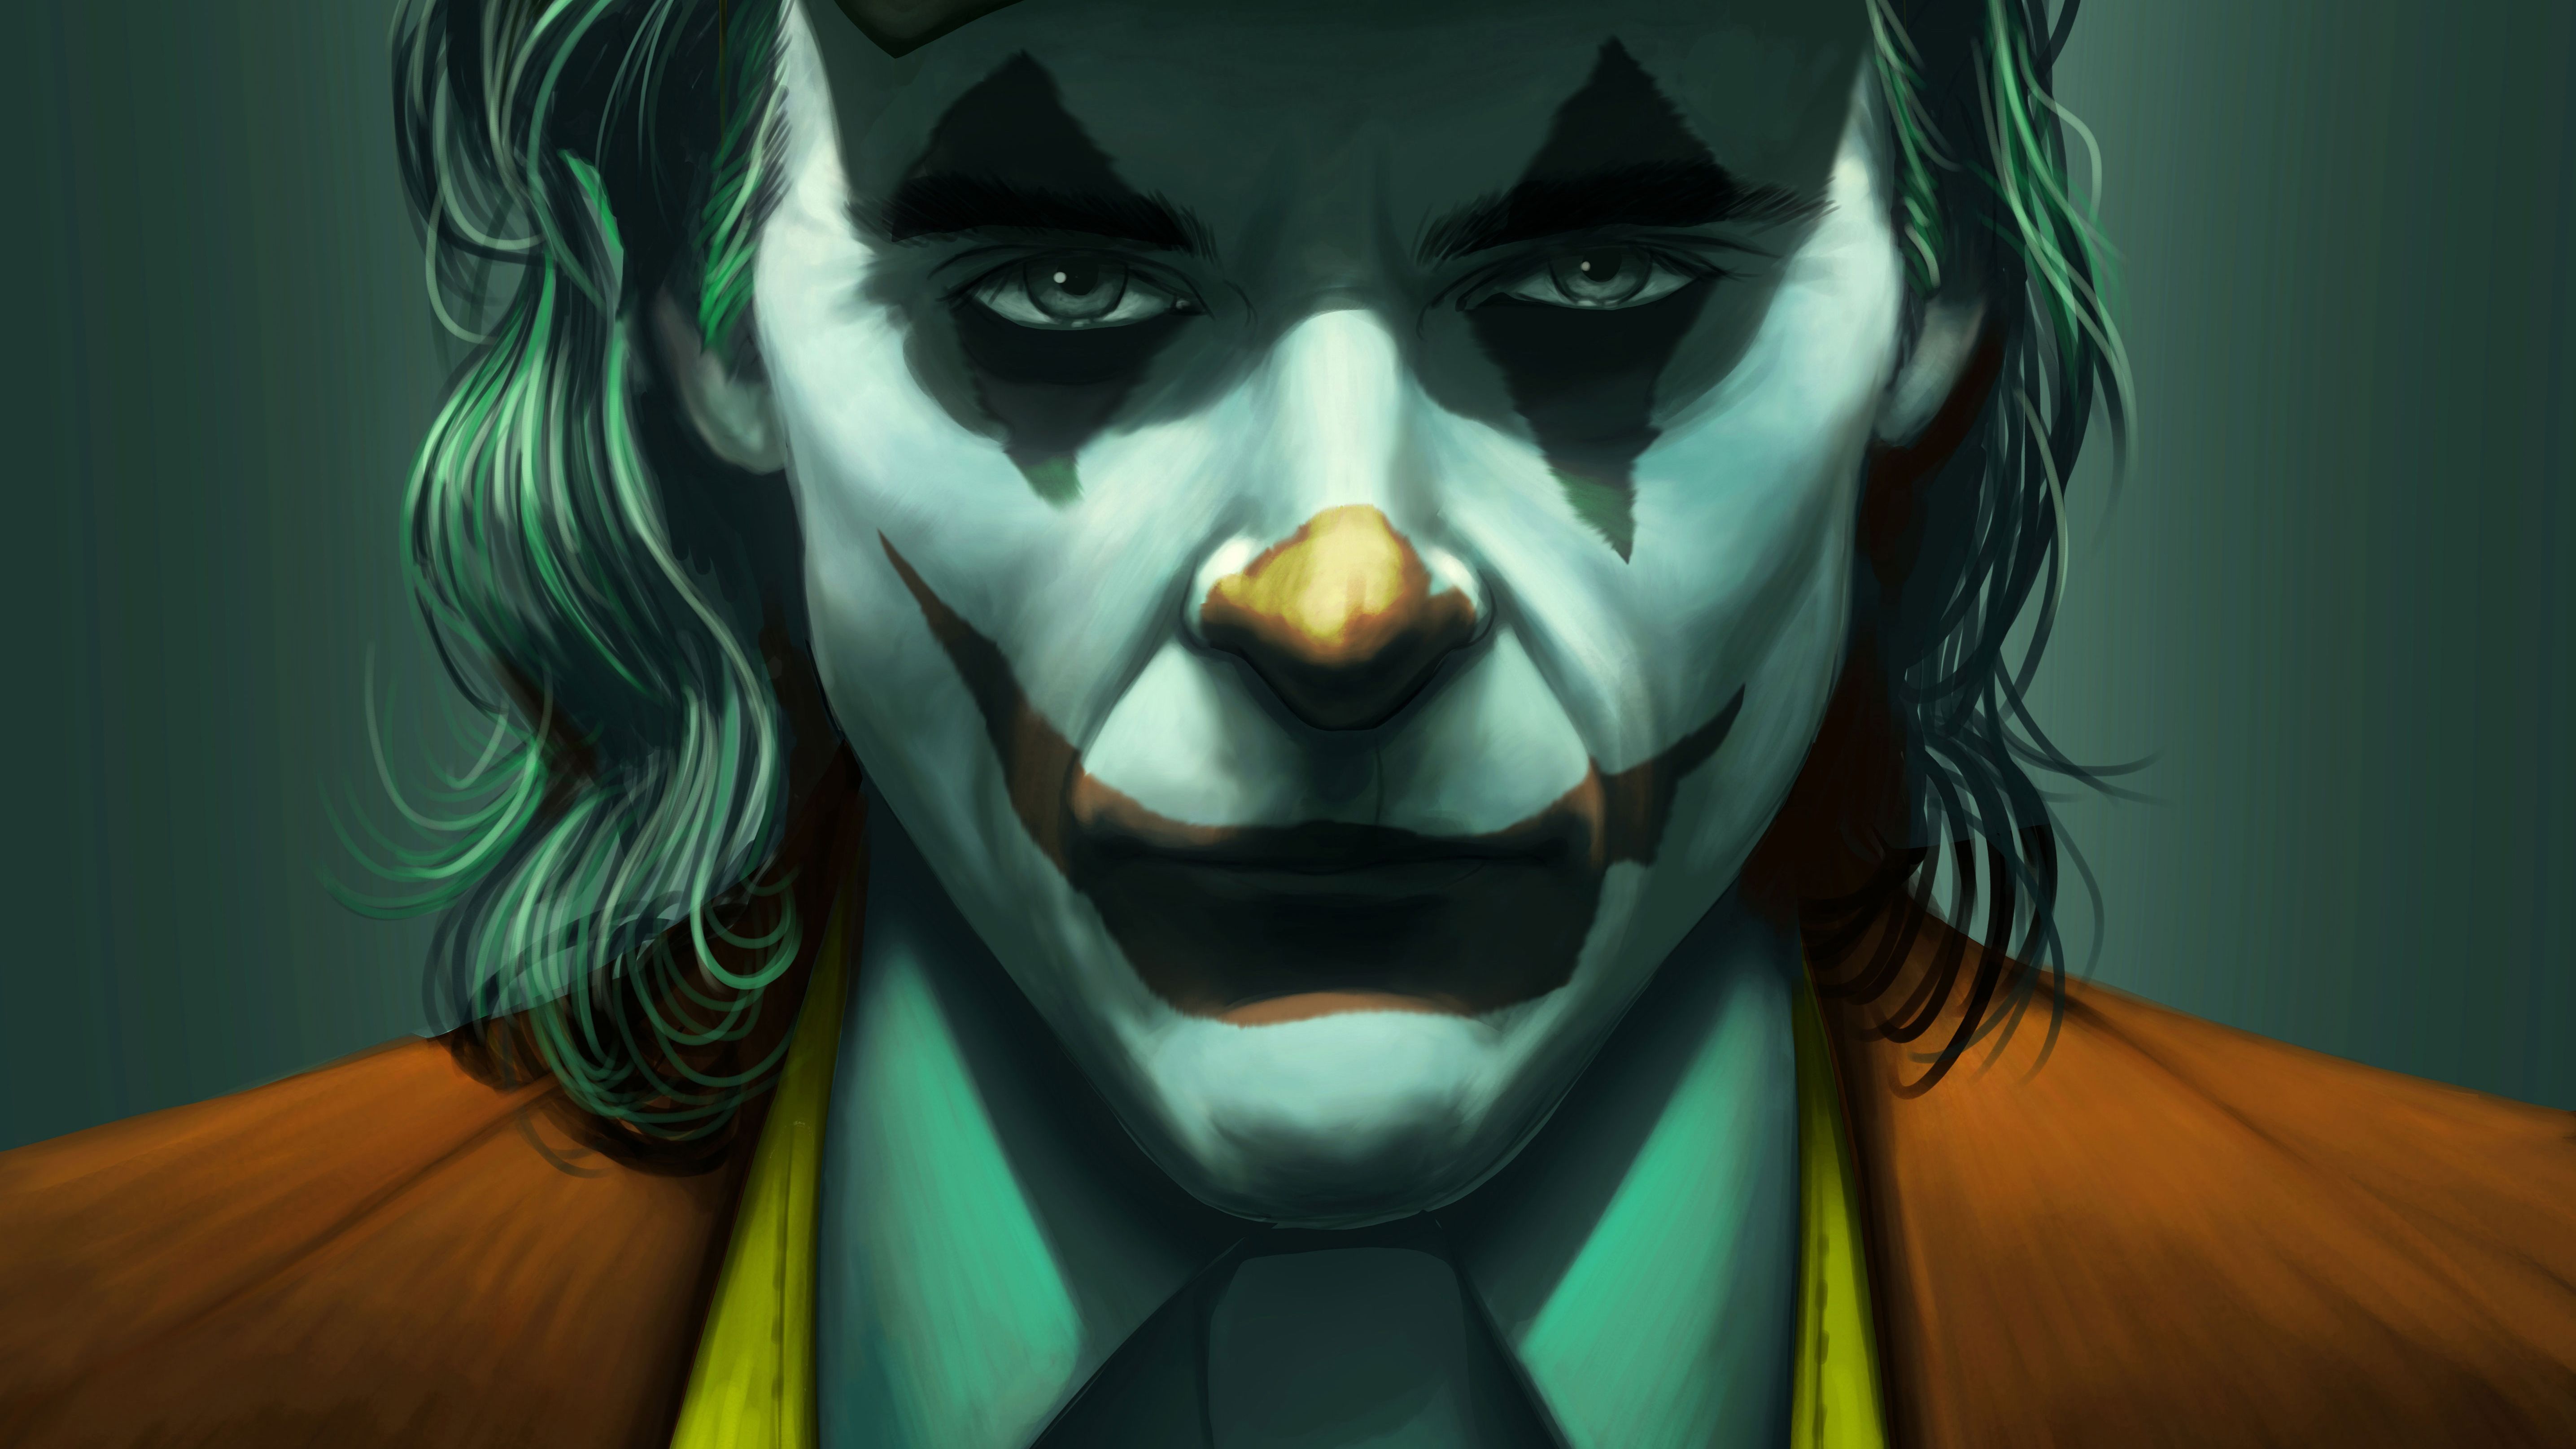 Joker 5kart, HD Superheroes, 4k Wallpaper, Image, Background, Photo and Picture